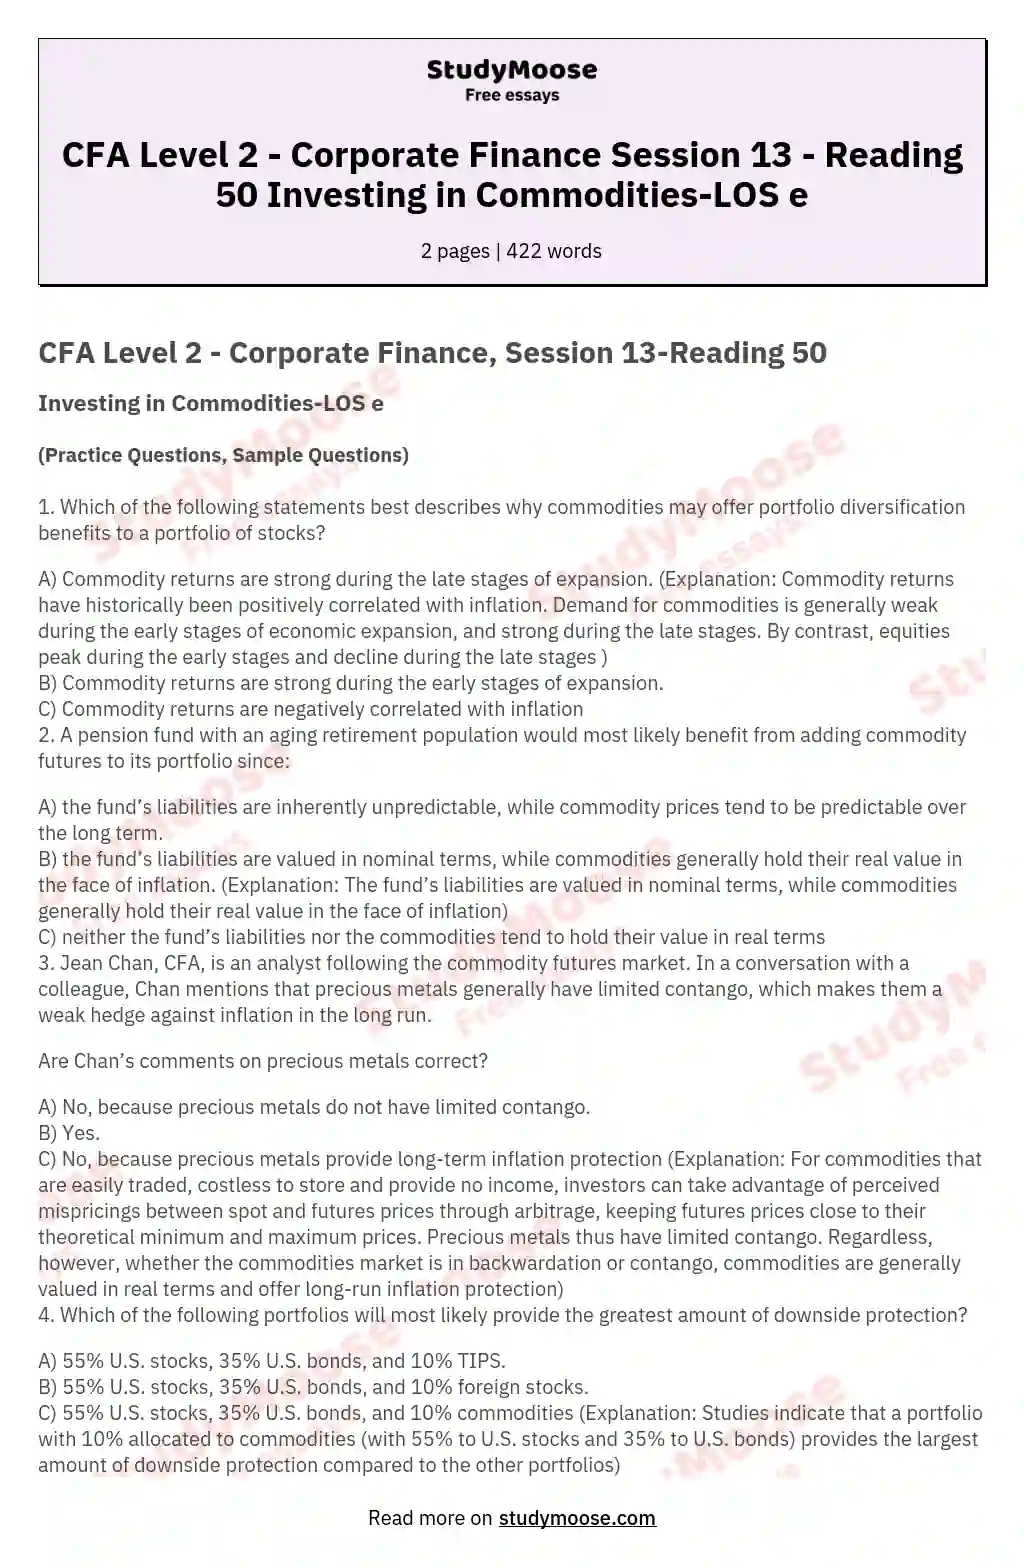 CFA Level 2 - Corporate Finance Session 13 - Reading 50 Investing in Commodities-LOS e essay